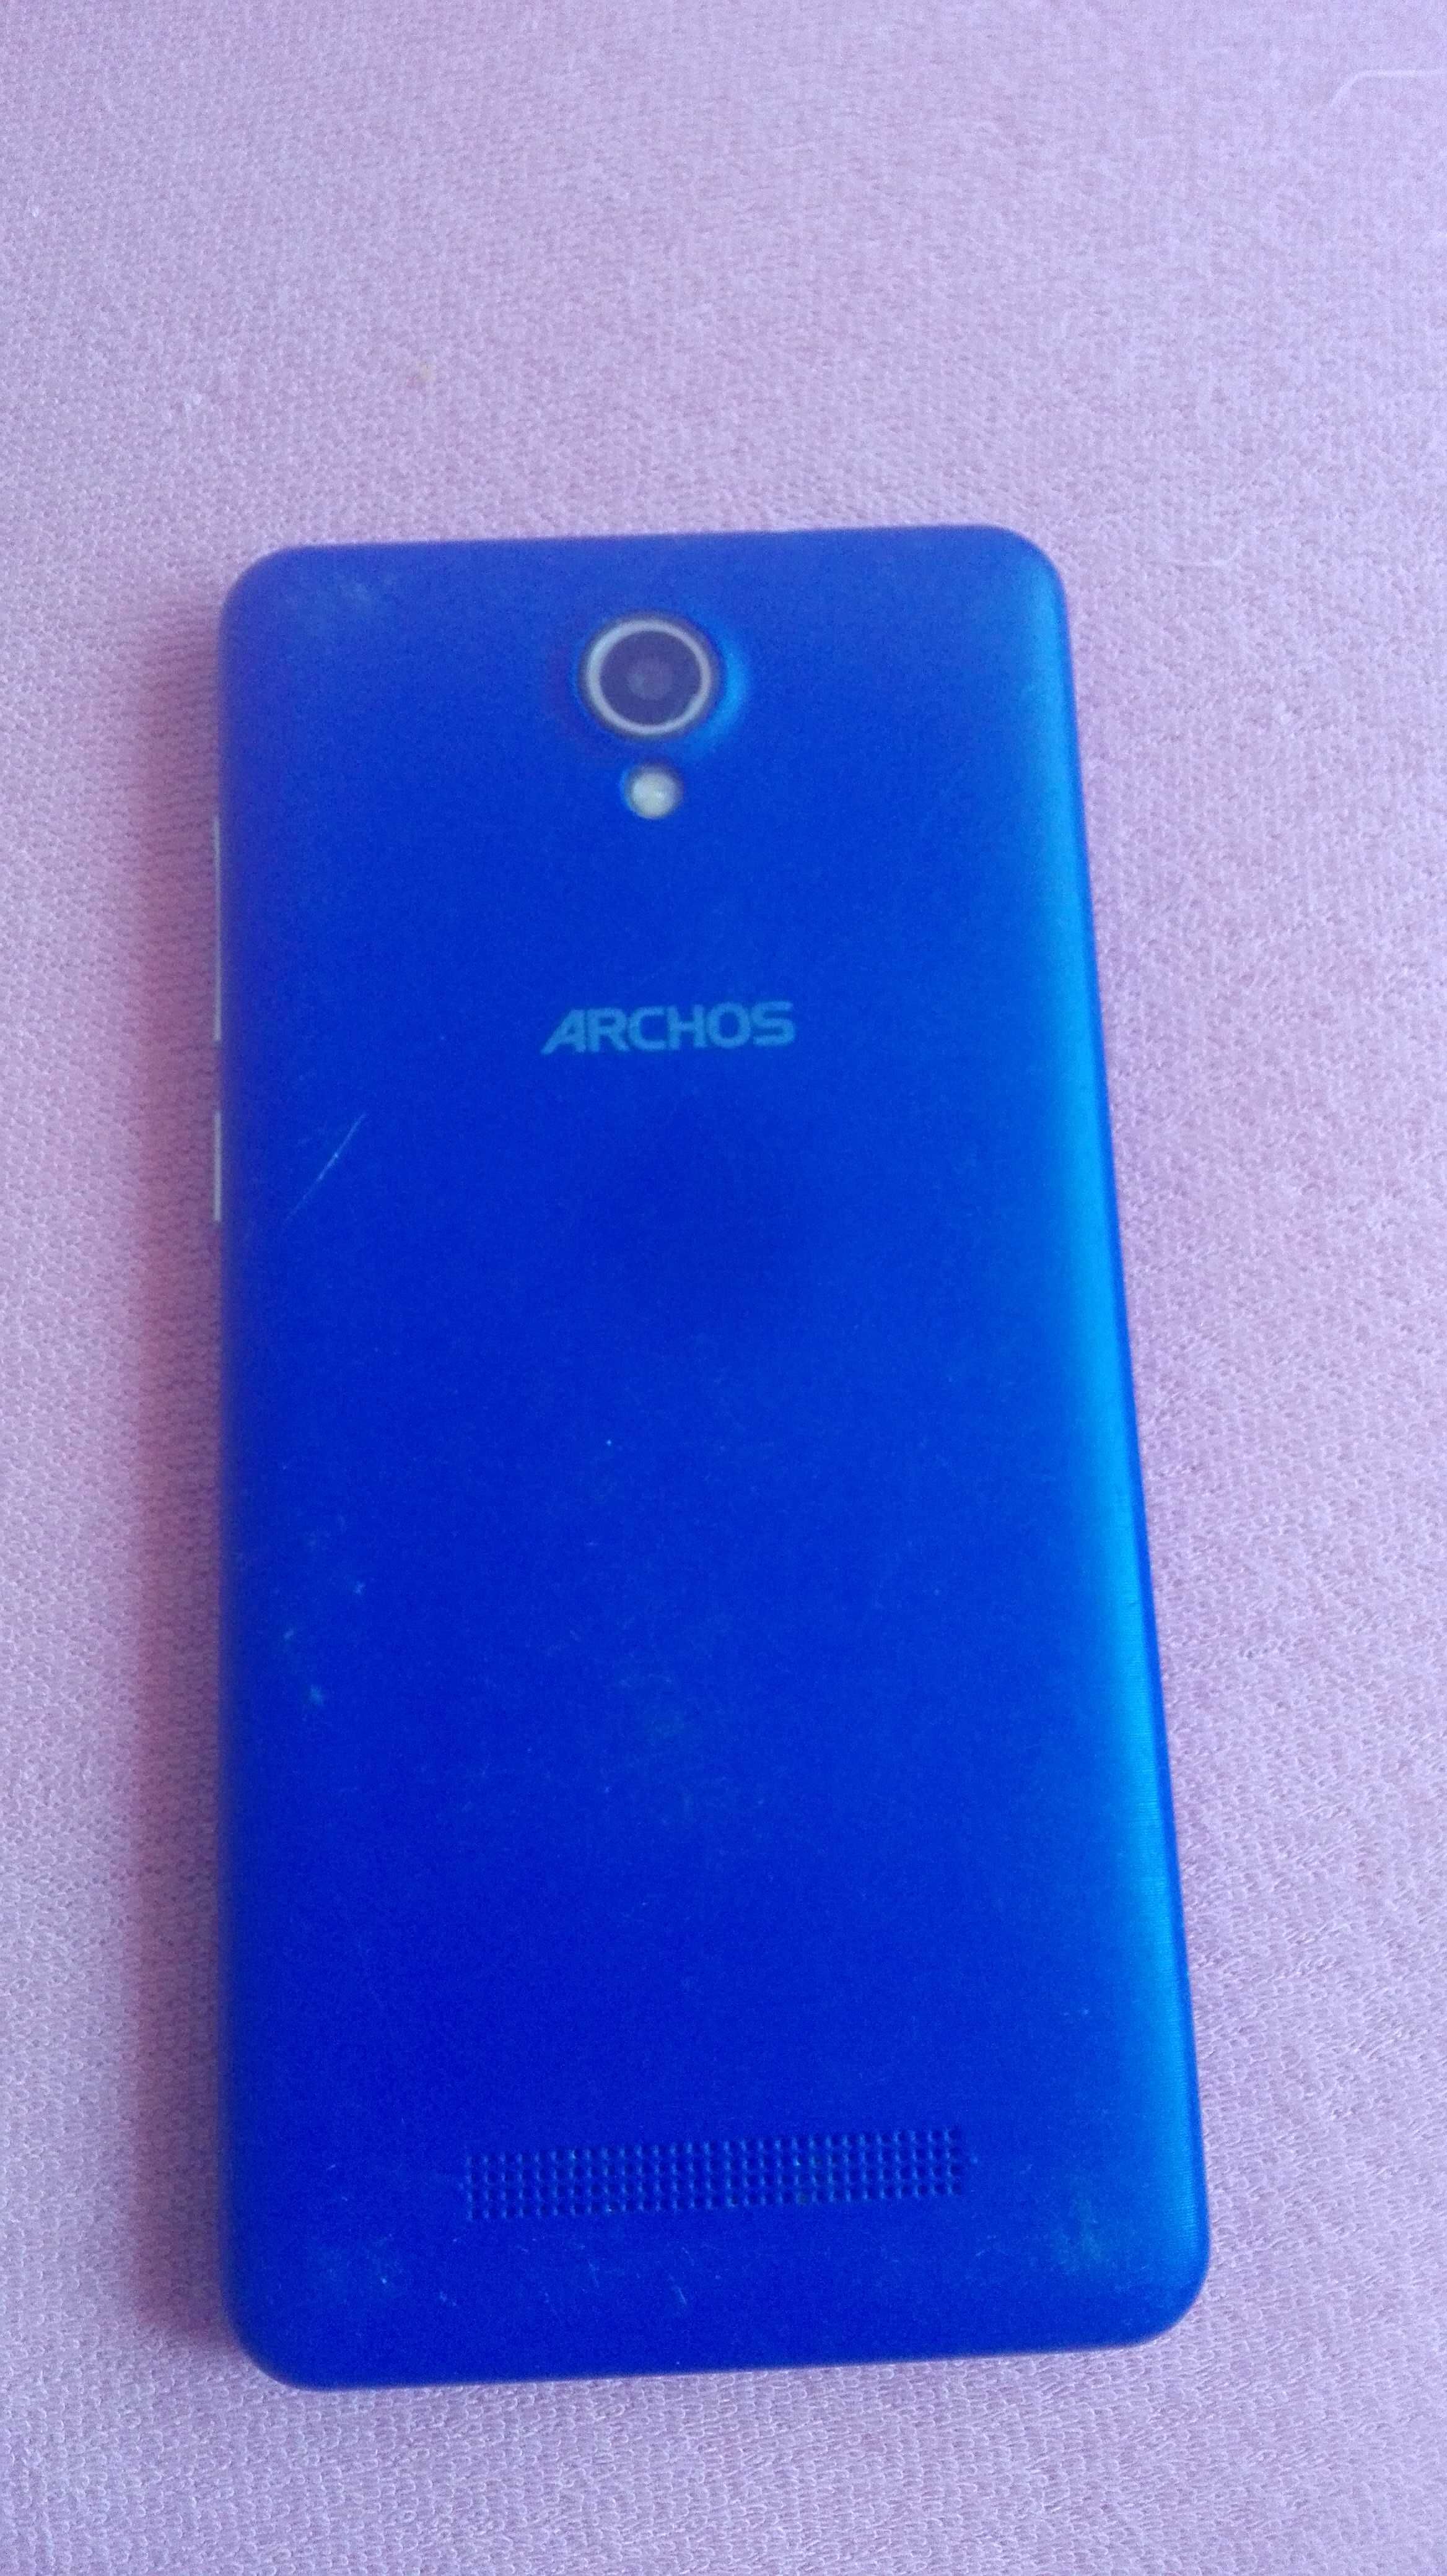 Telefoane Archos 50 color 3G pentru piese